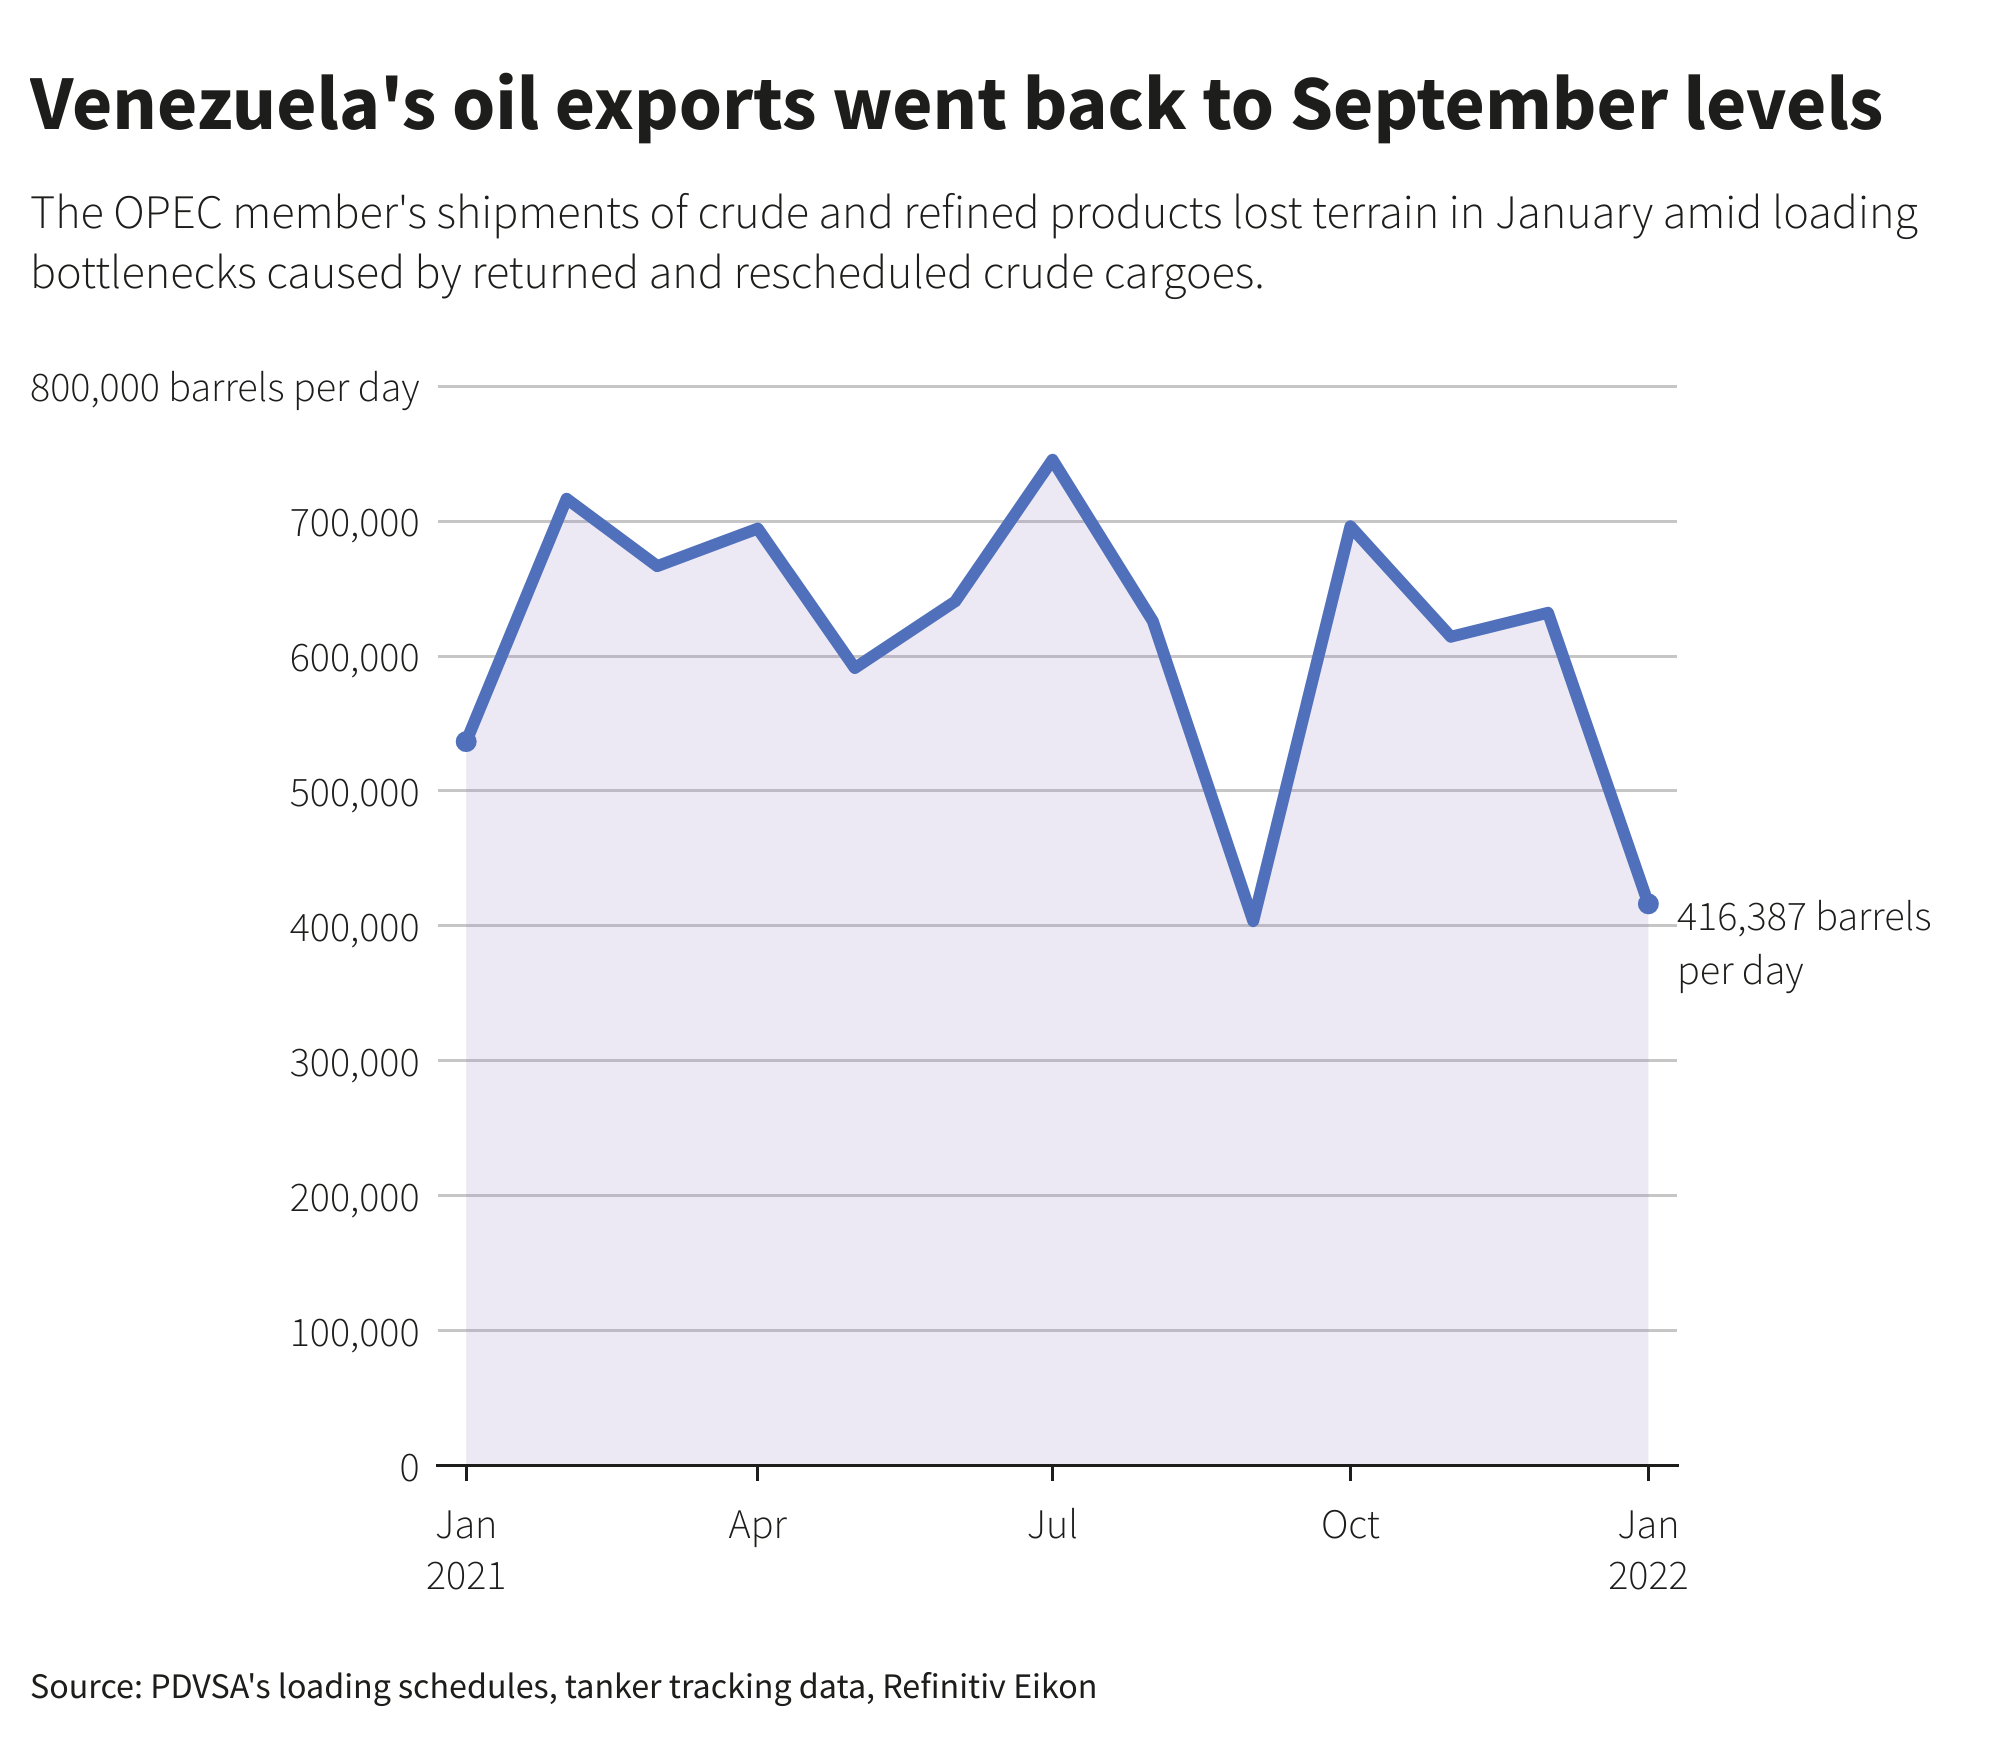 Venezuela's oil exports went back to September levels